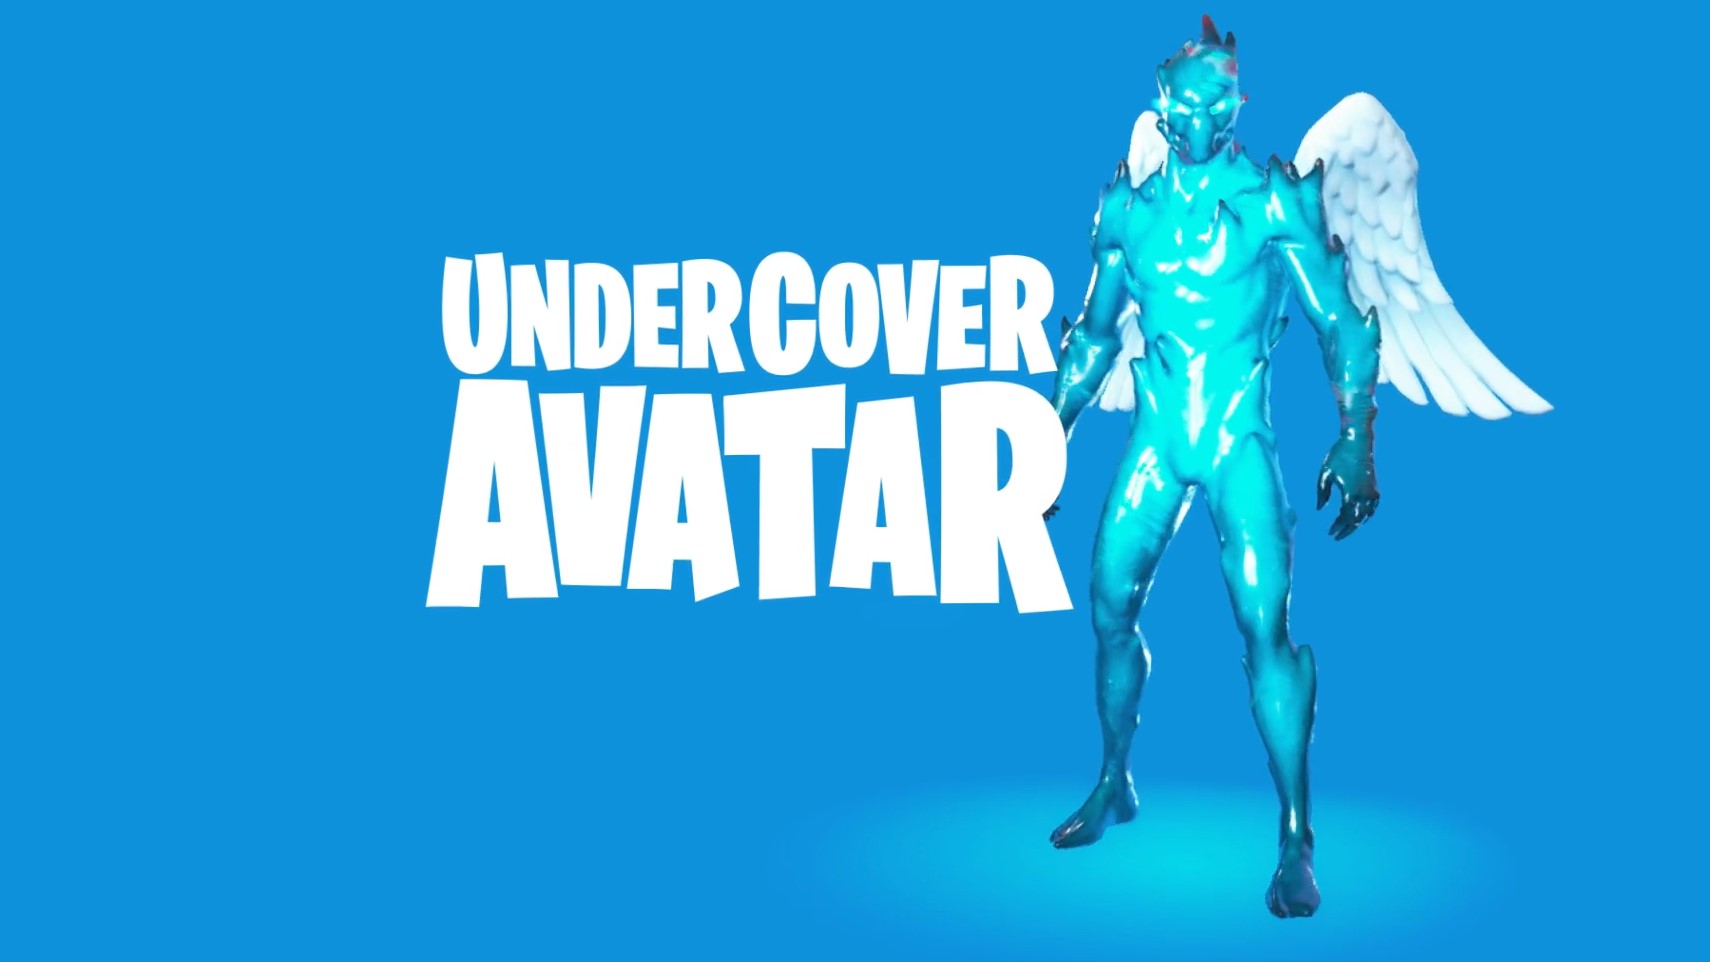 Undercover avatar